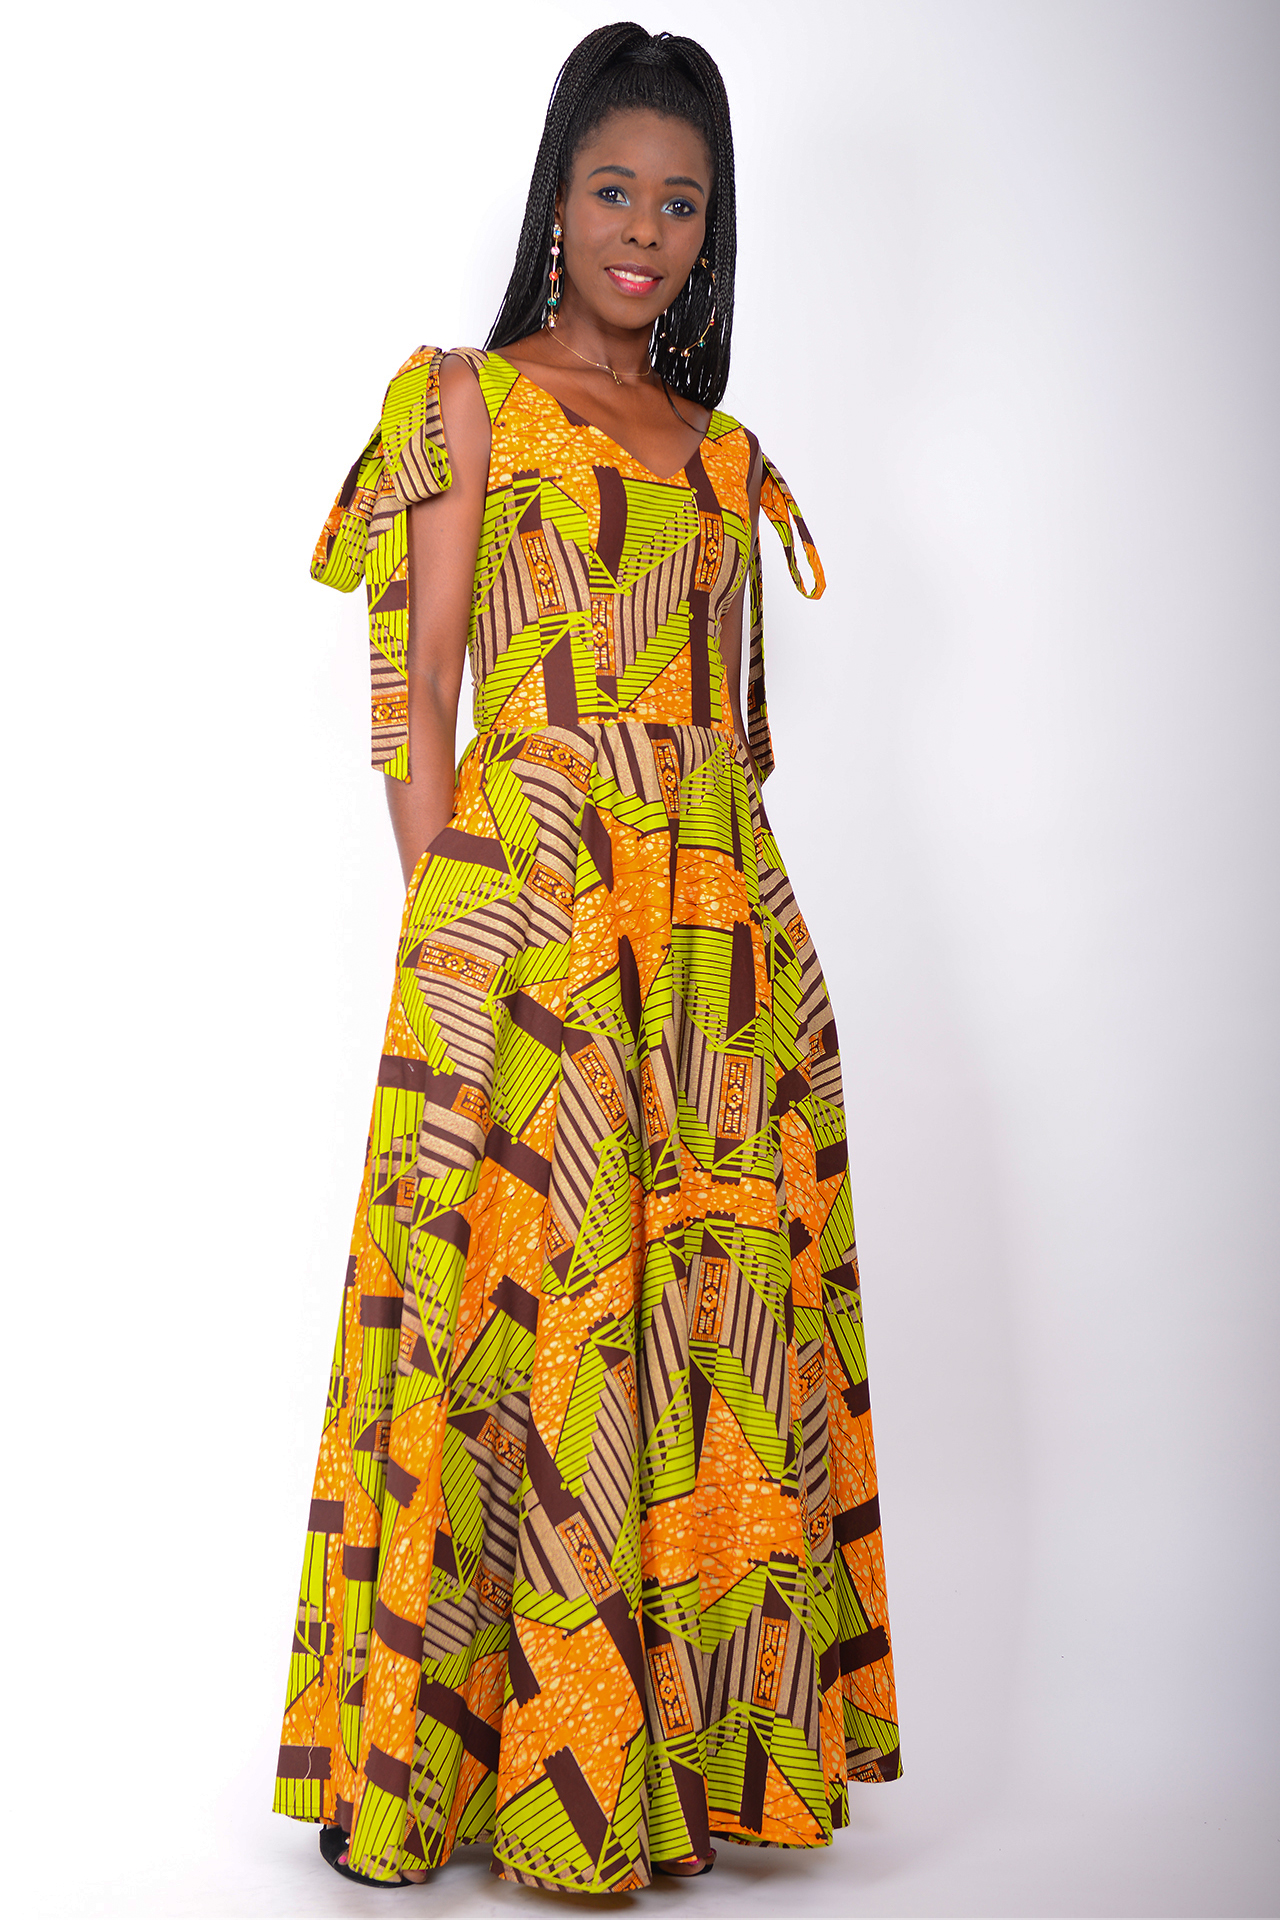 Afrikanische Mode - Euge-W Kollektion 2020/2021 - Estelle & Anaelle